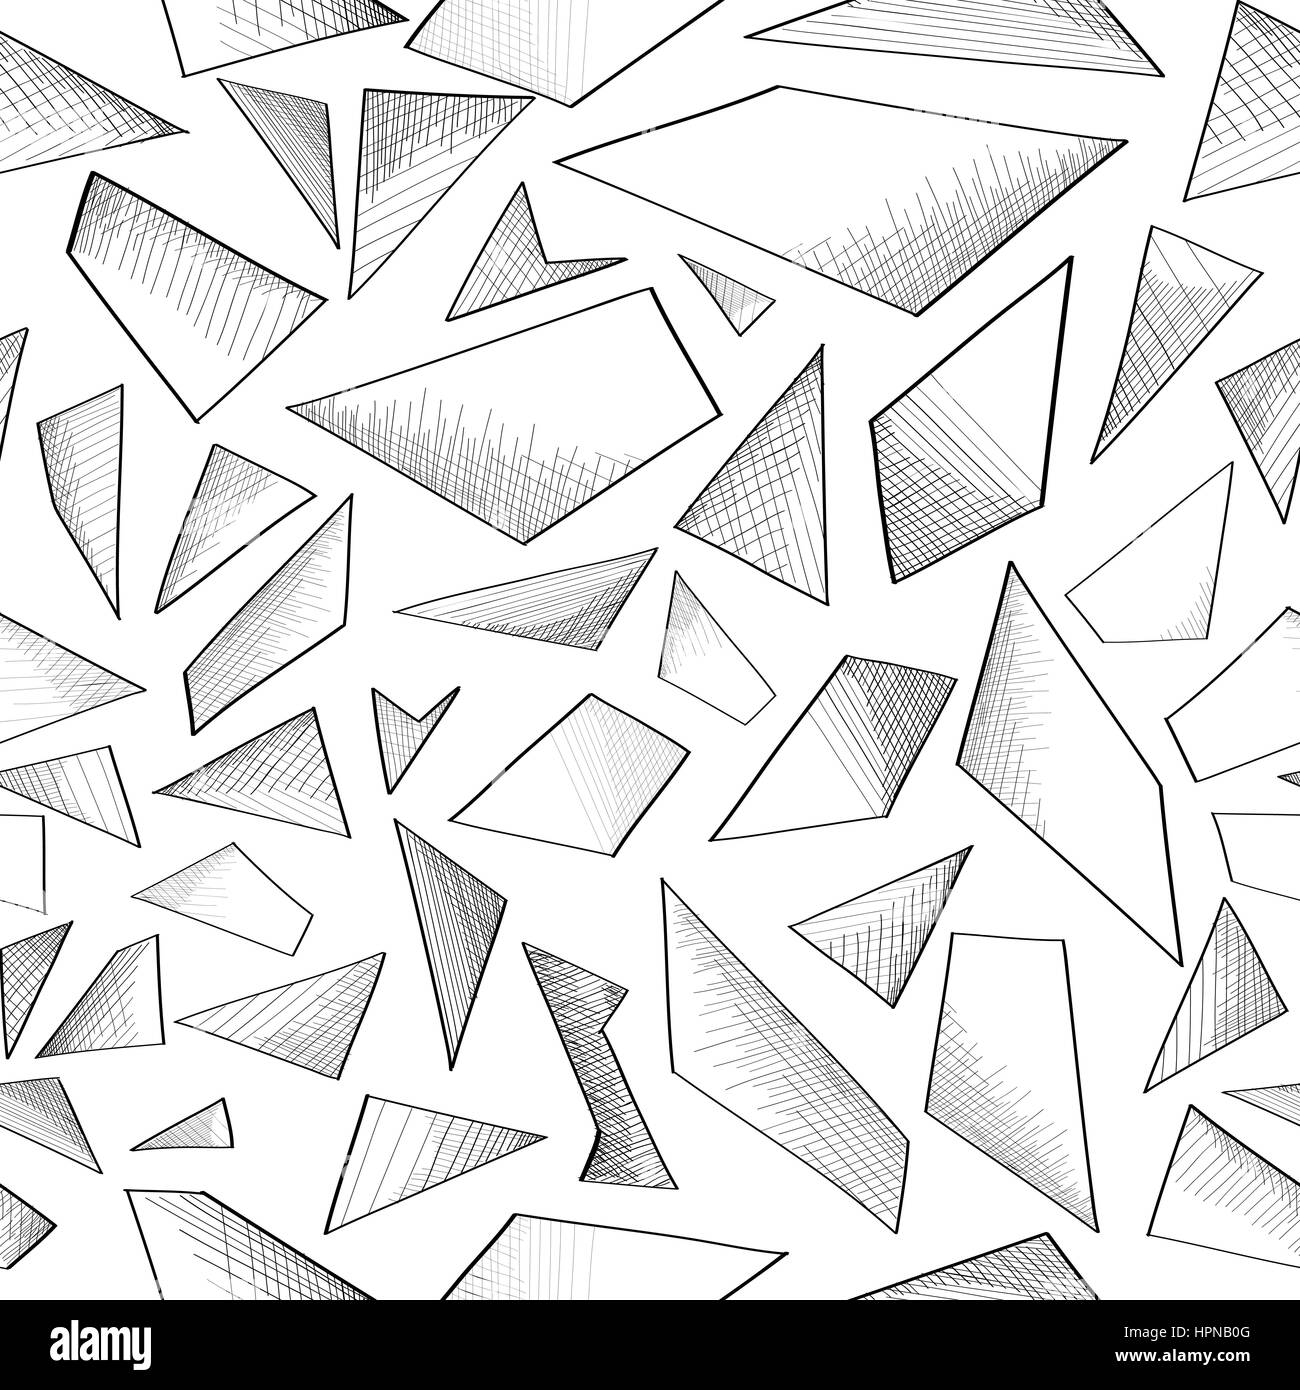 Background Pencil Sketch Strokes Crosshatch Handdrawing Stock Illustration  396948934  Shutterstock